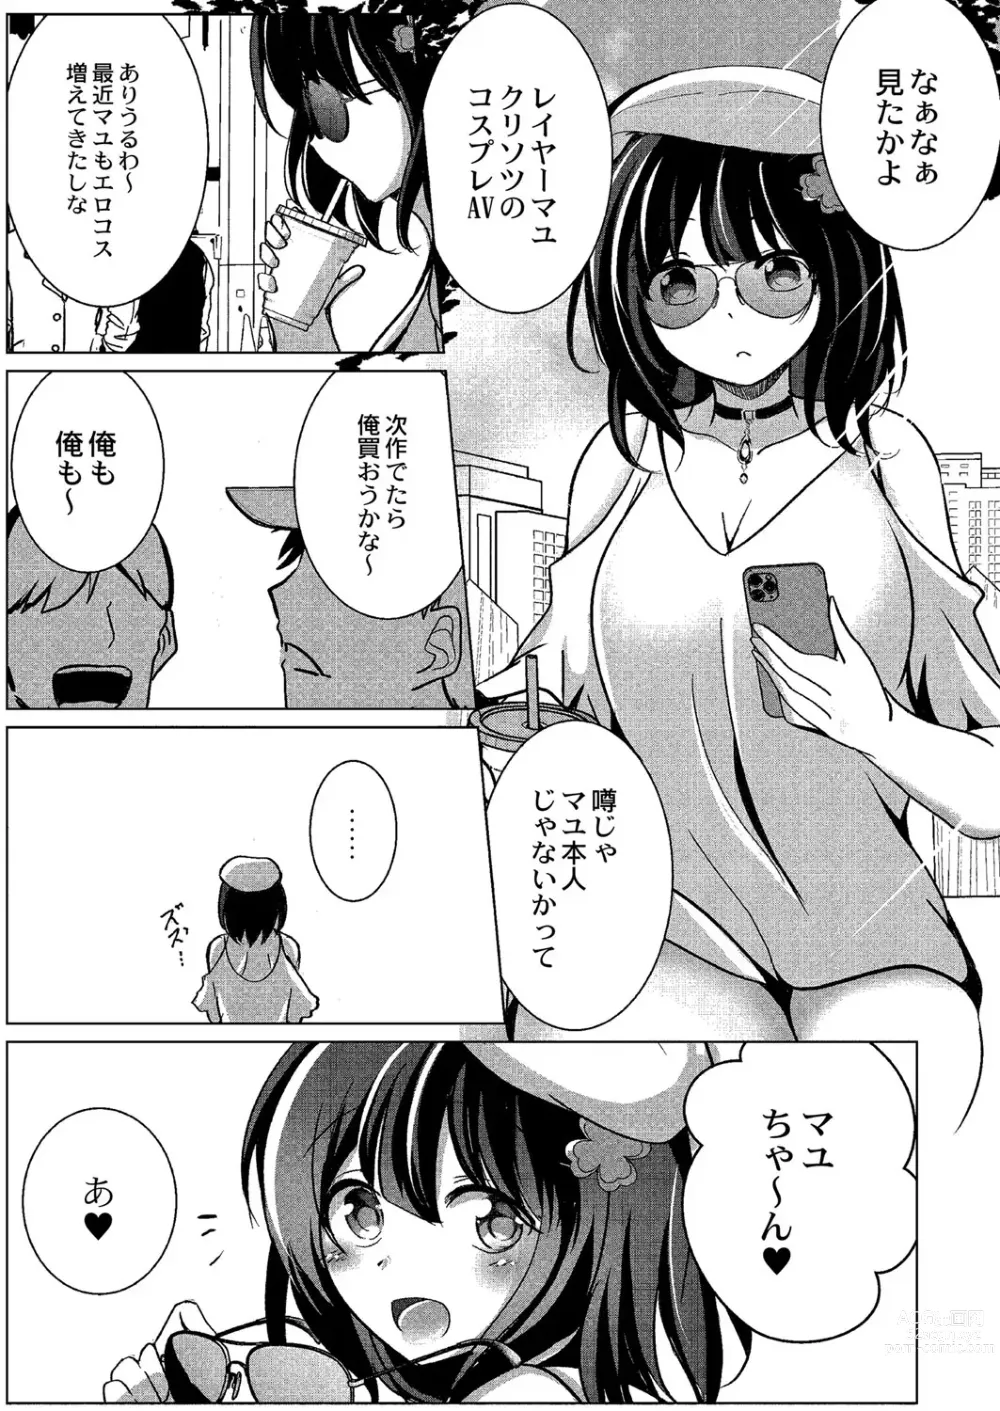 Page 206 of manga Wakarasare